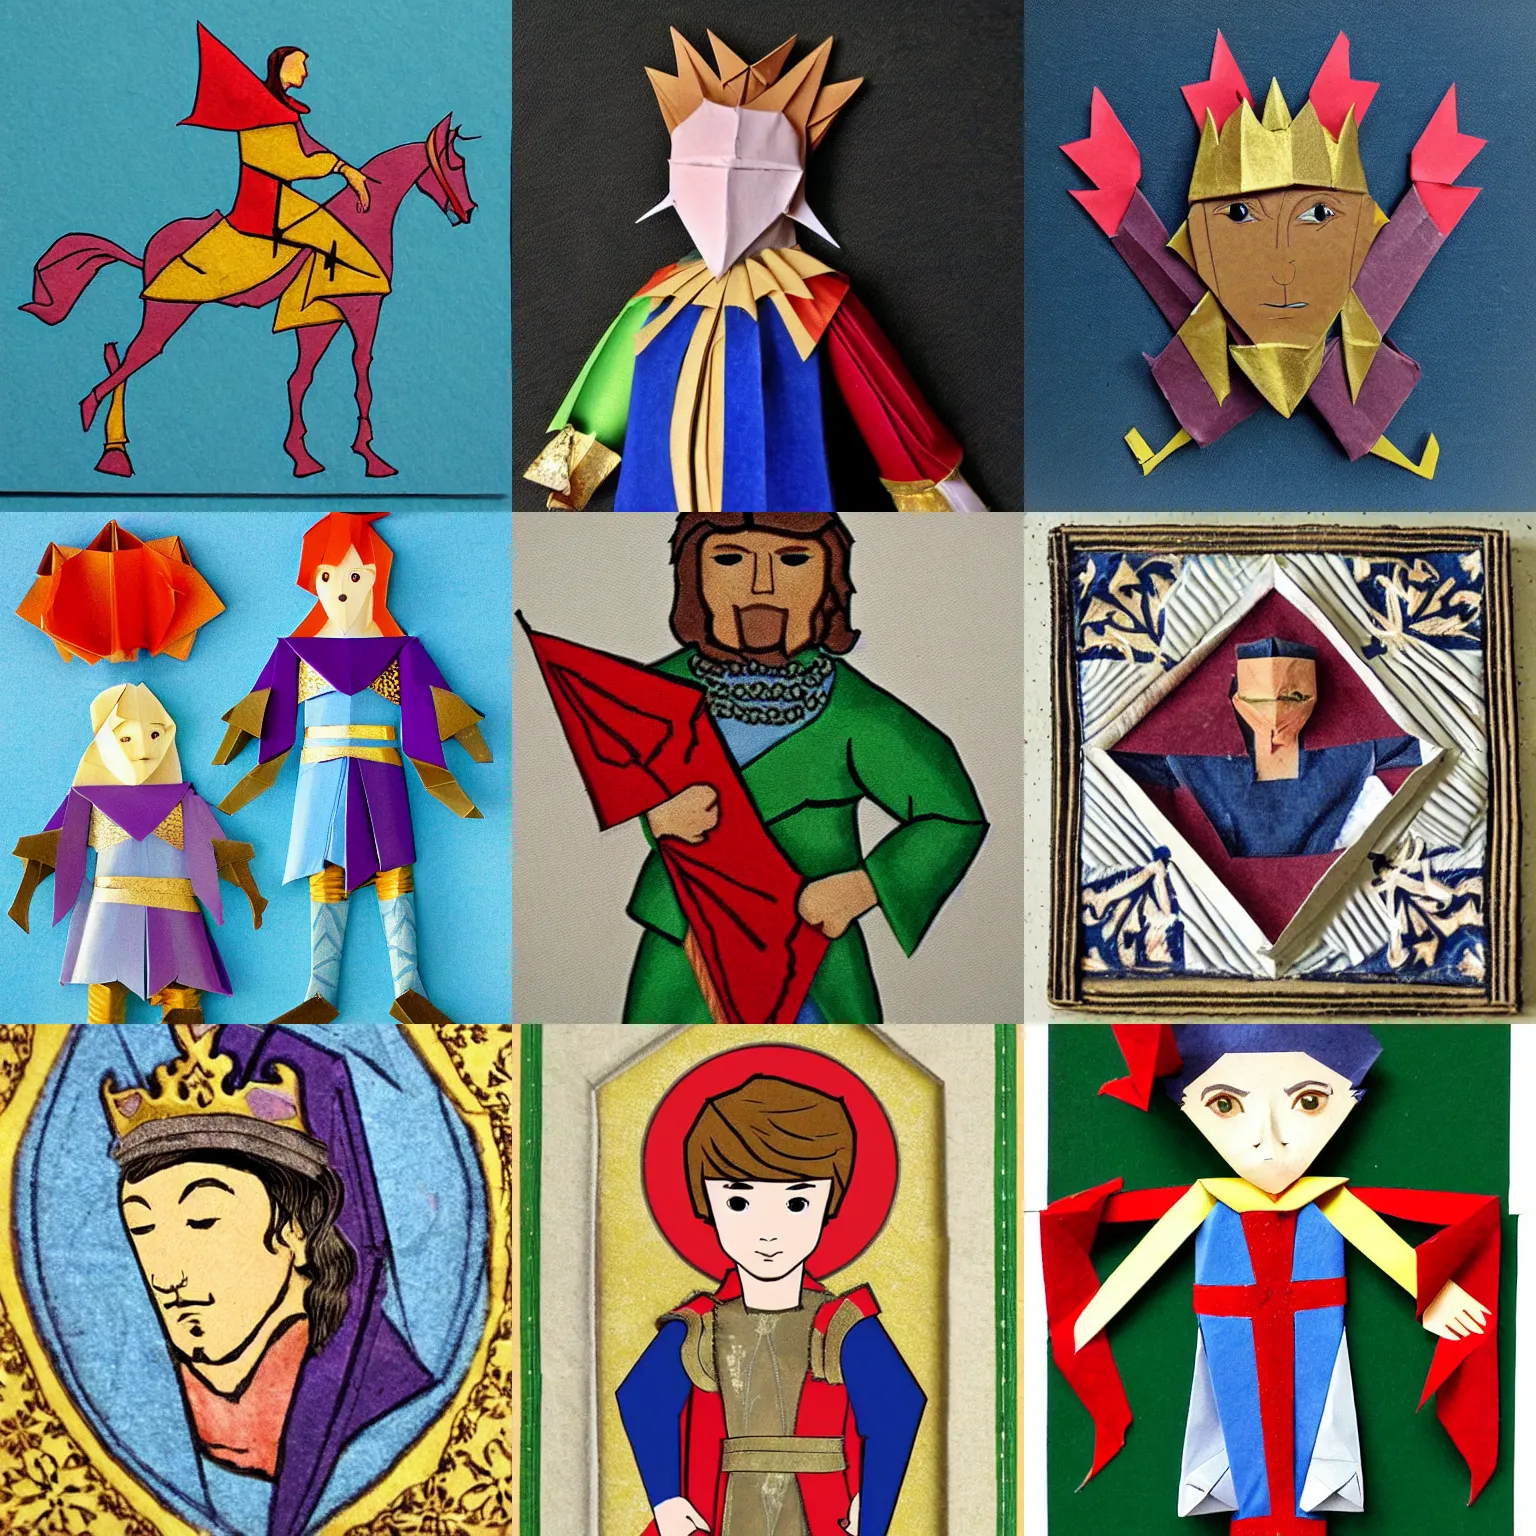 Prompt: medieval prince, origami